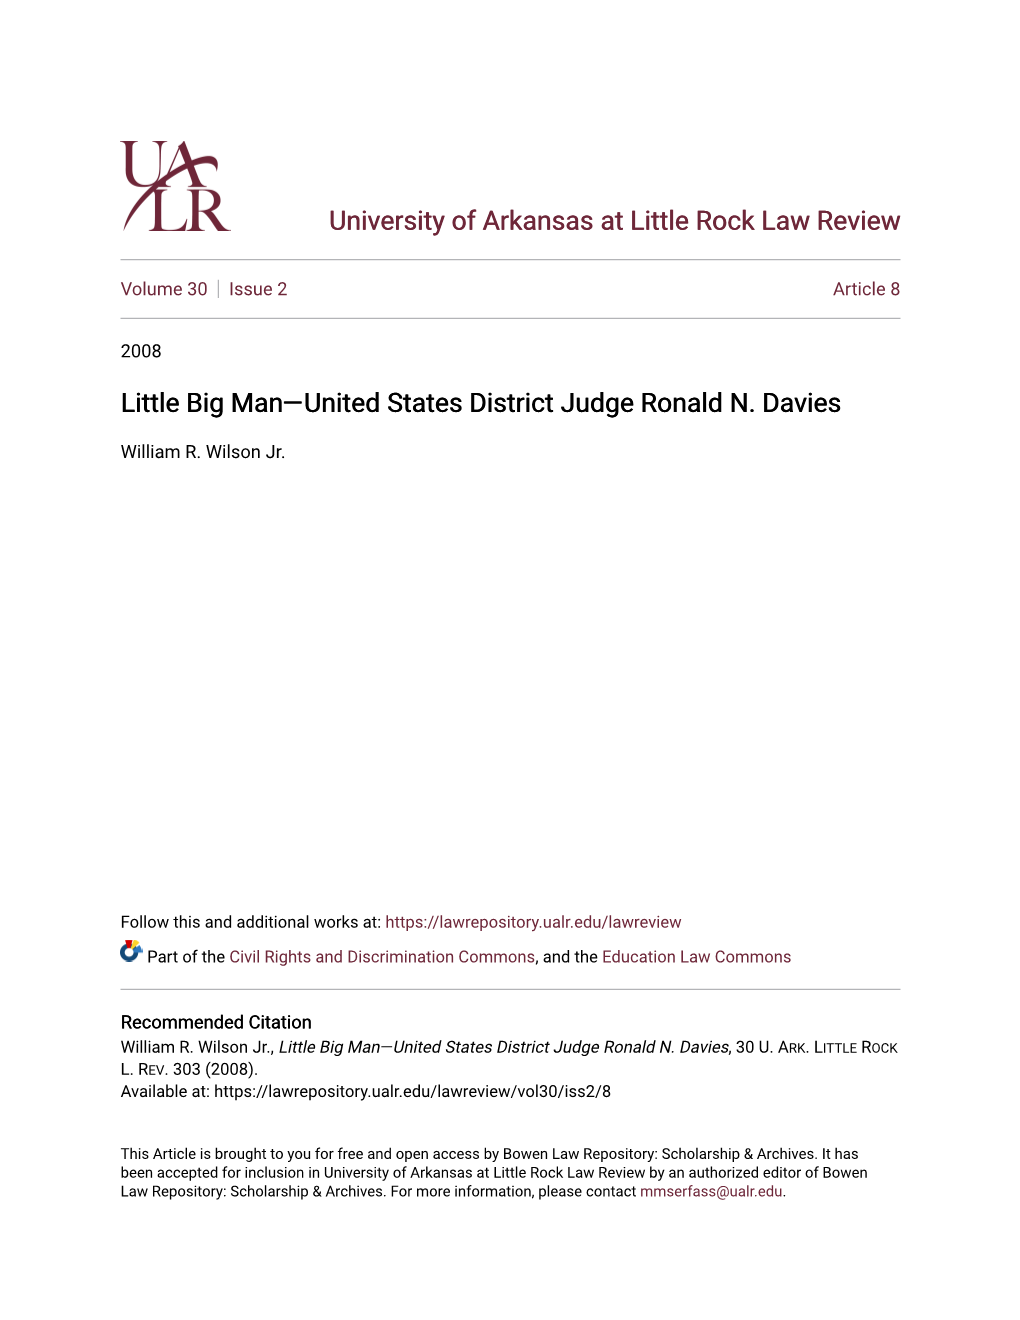 Little Big Man—United States District Judge Ronald N. Davies